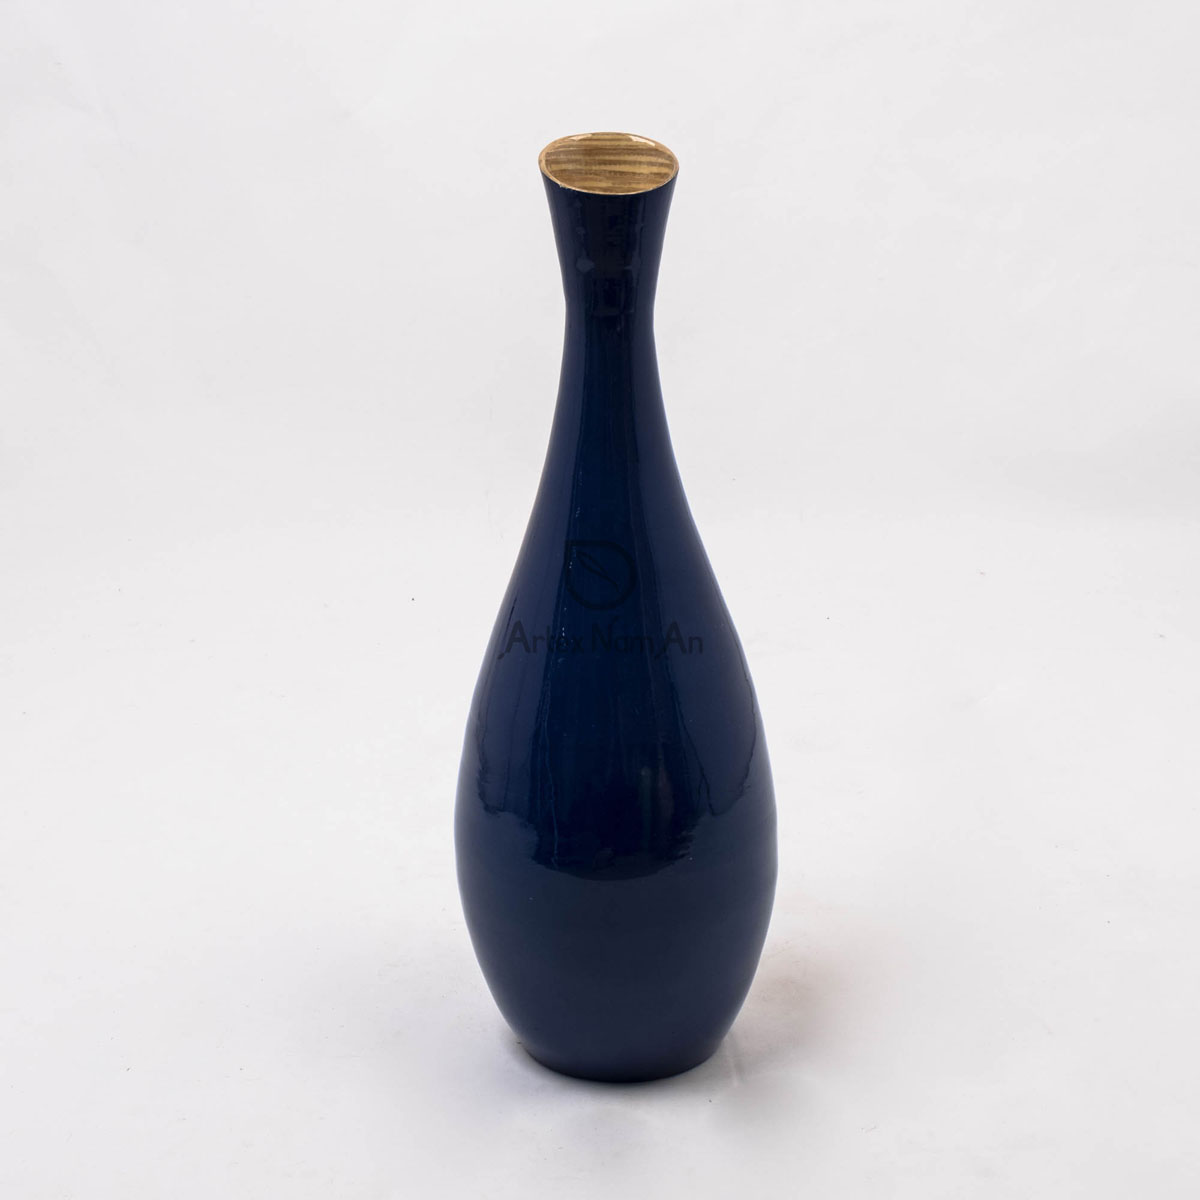 Spun Bamboo Natural Flower Vase S 15 02 074 01